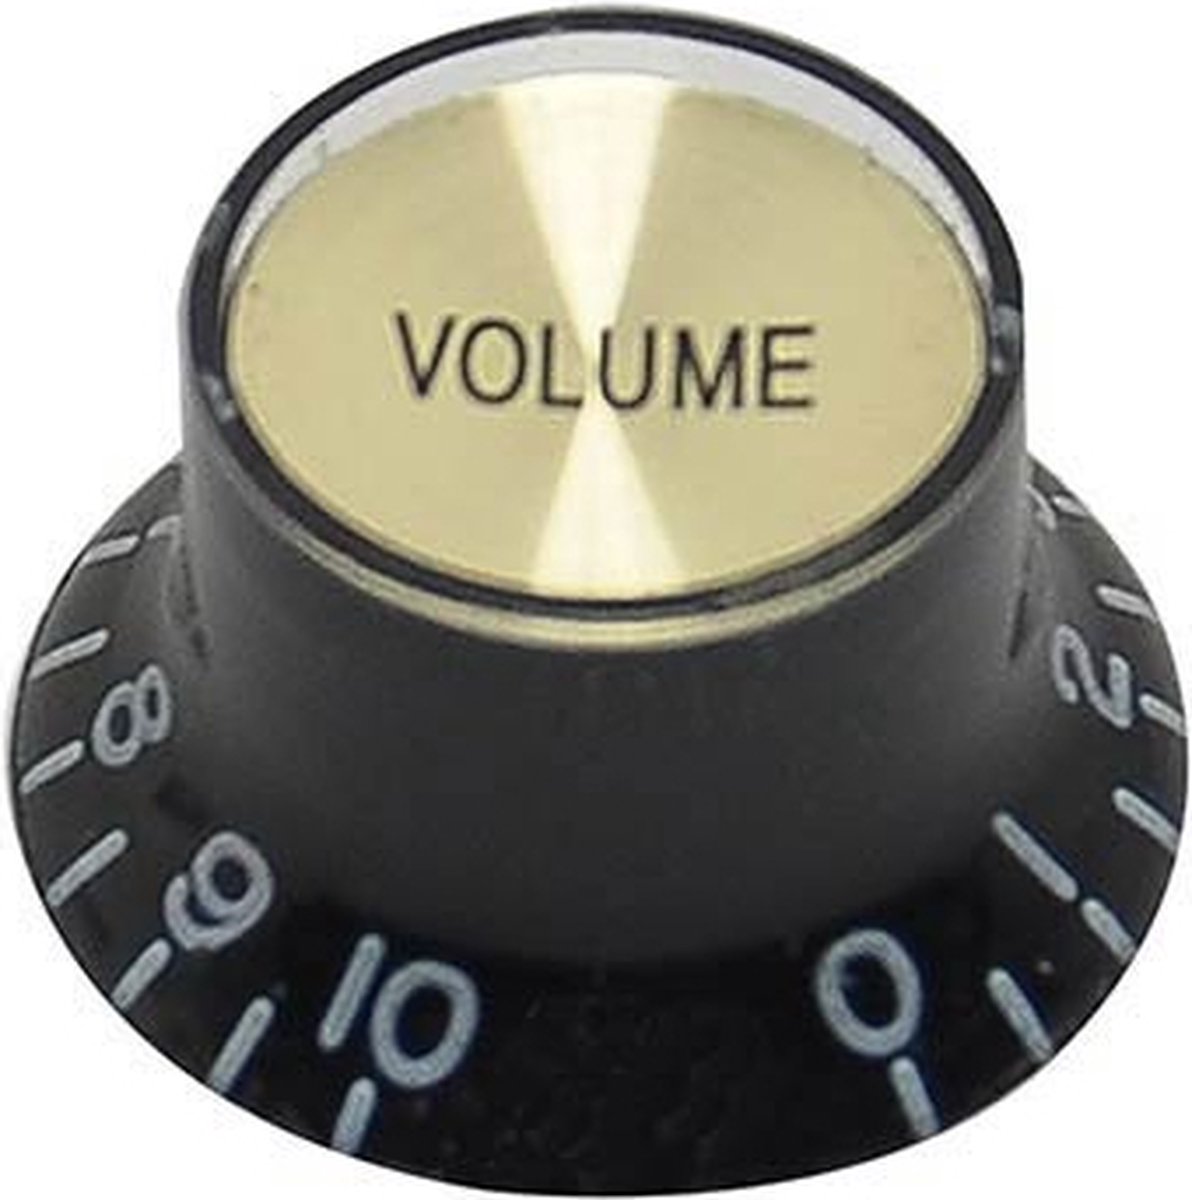 bell knob SG model, black with gold cap, volume